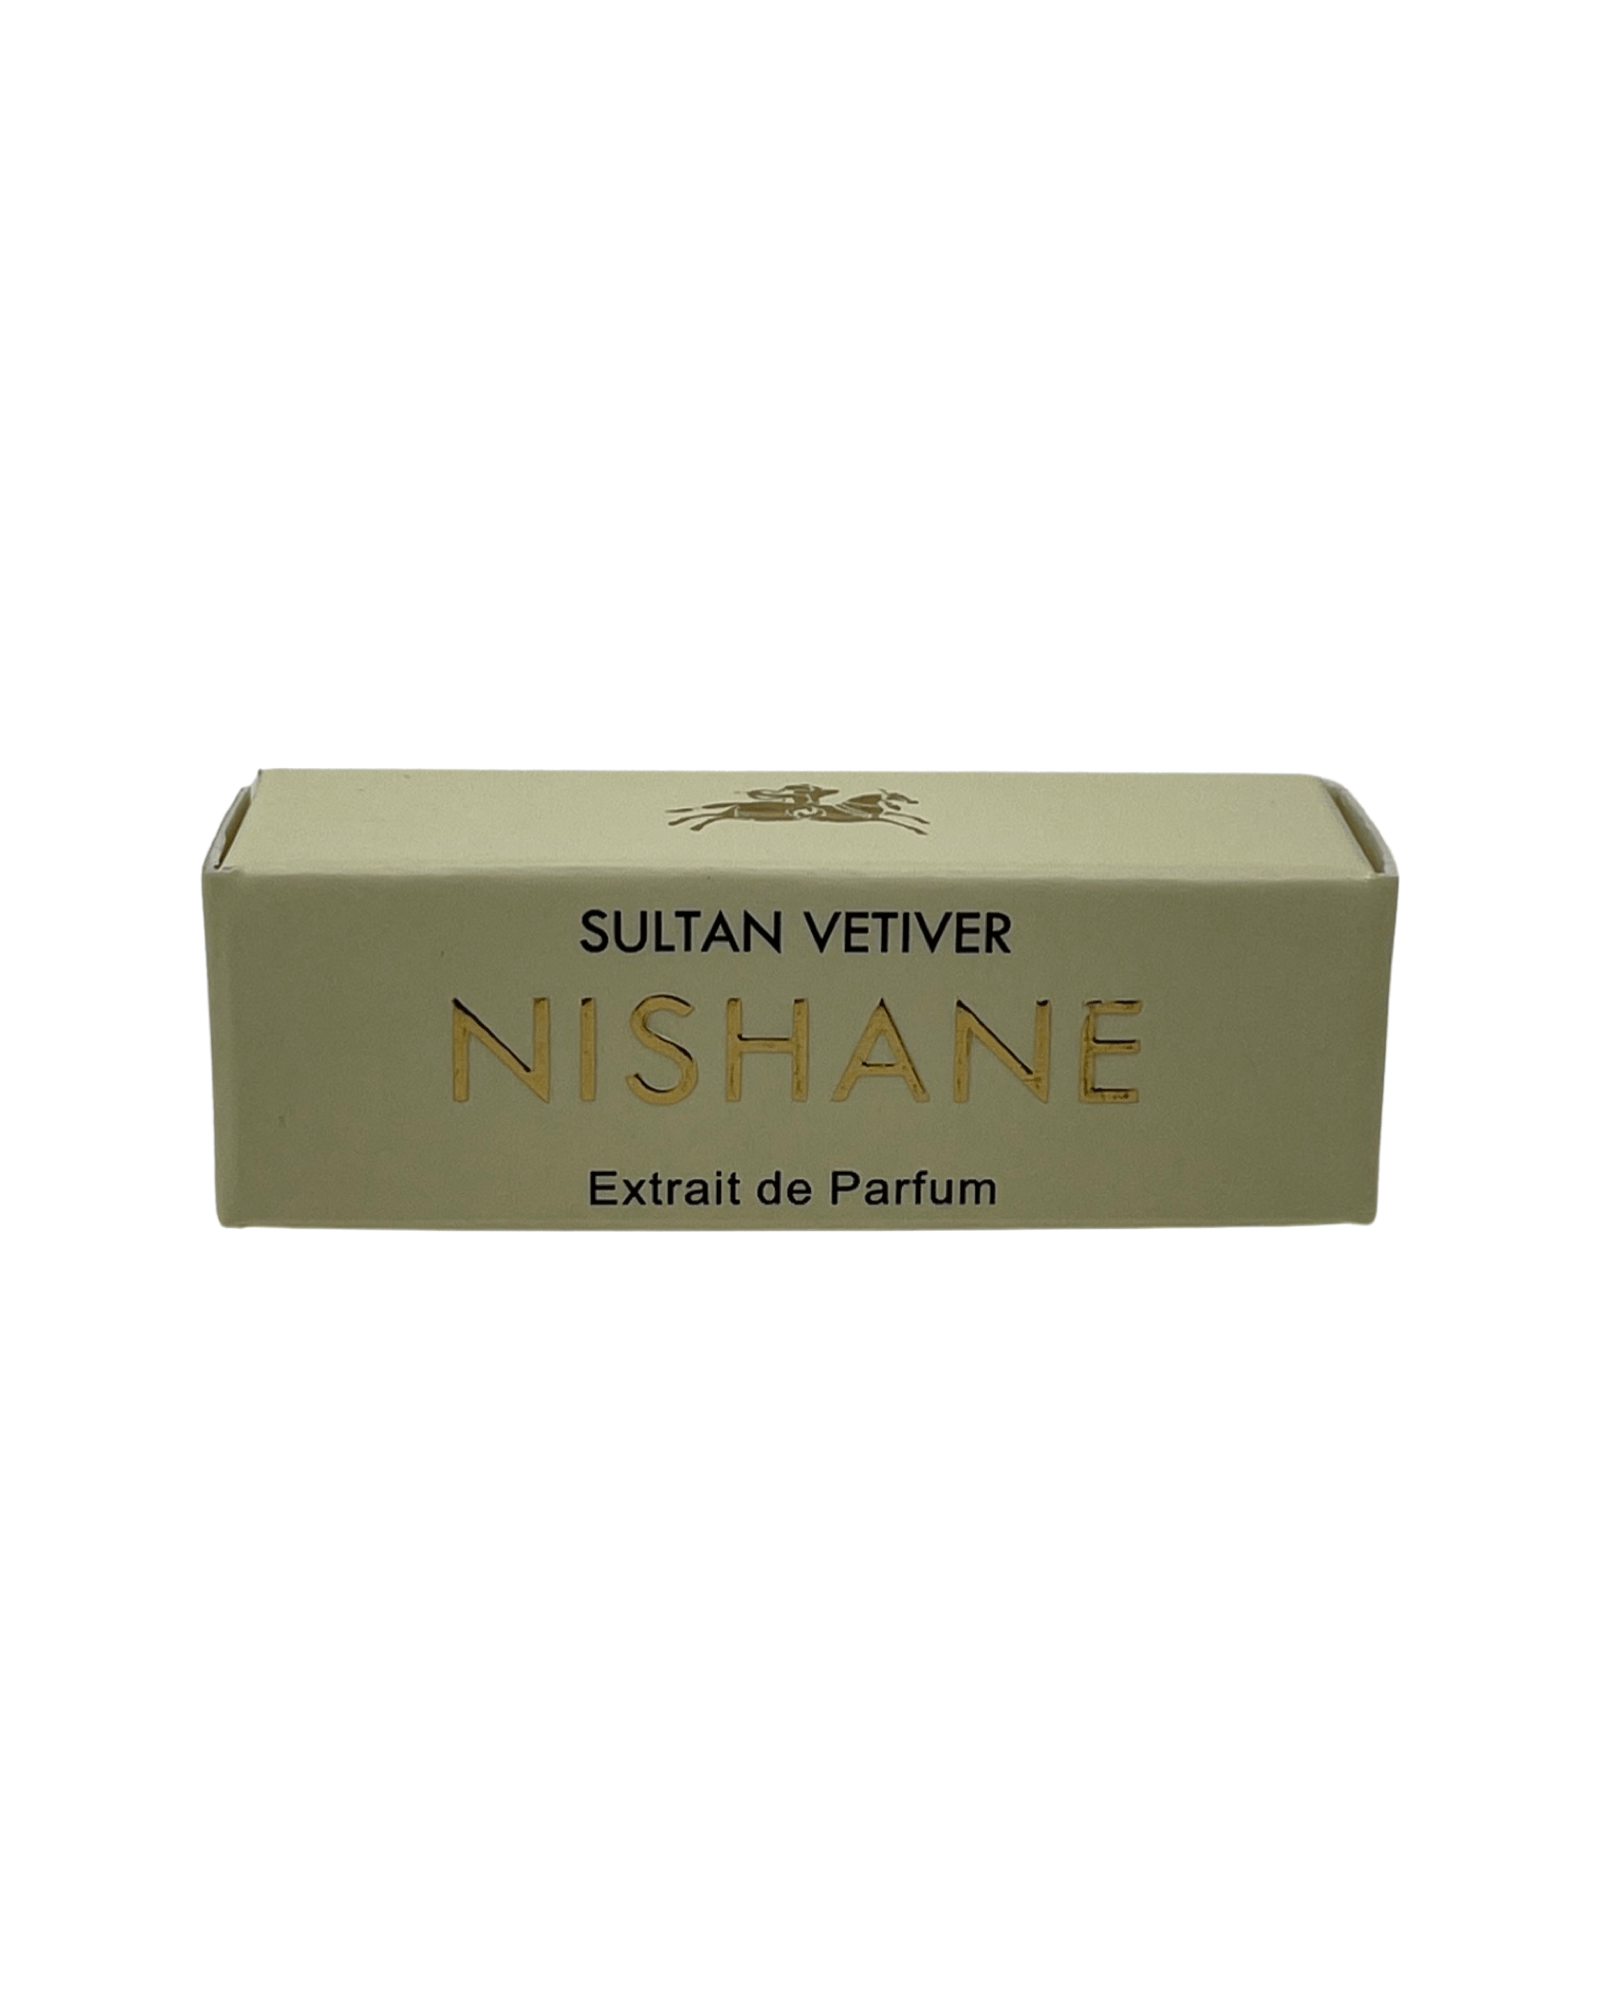 Nishane - Sultan Vetiver - 1.5ml.